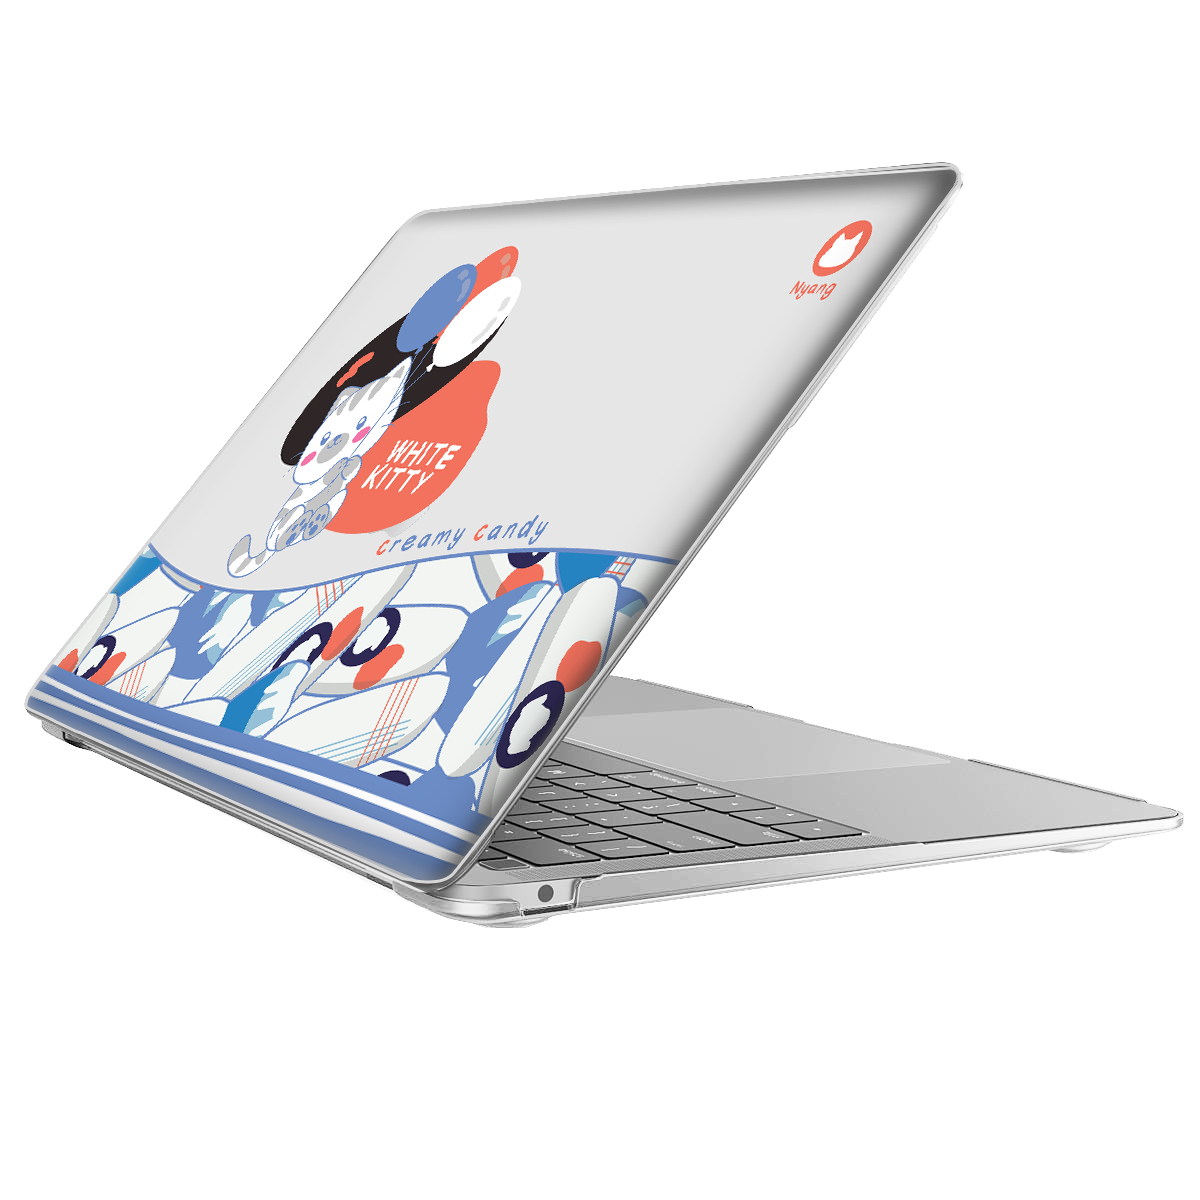 MacBook Snap Case - White Kitty